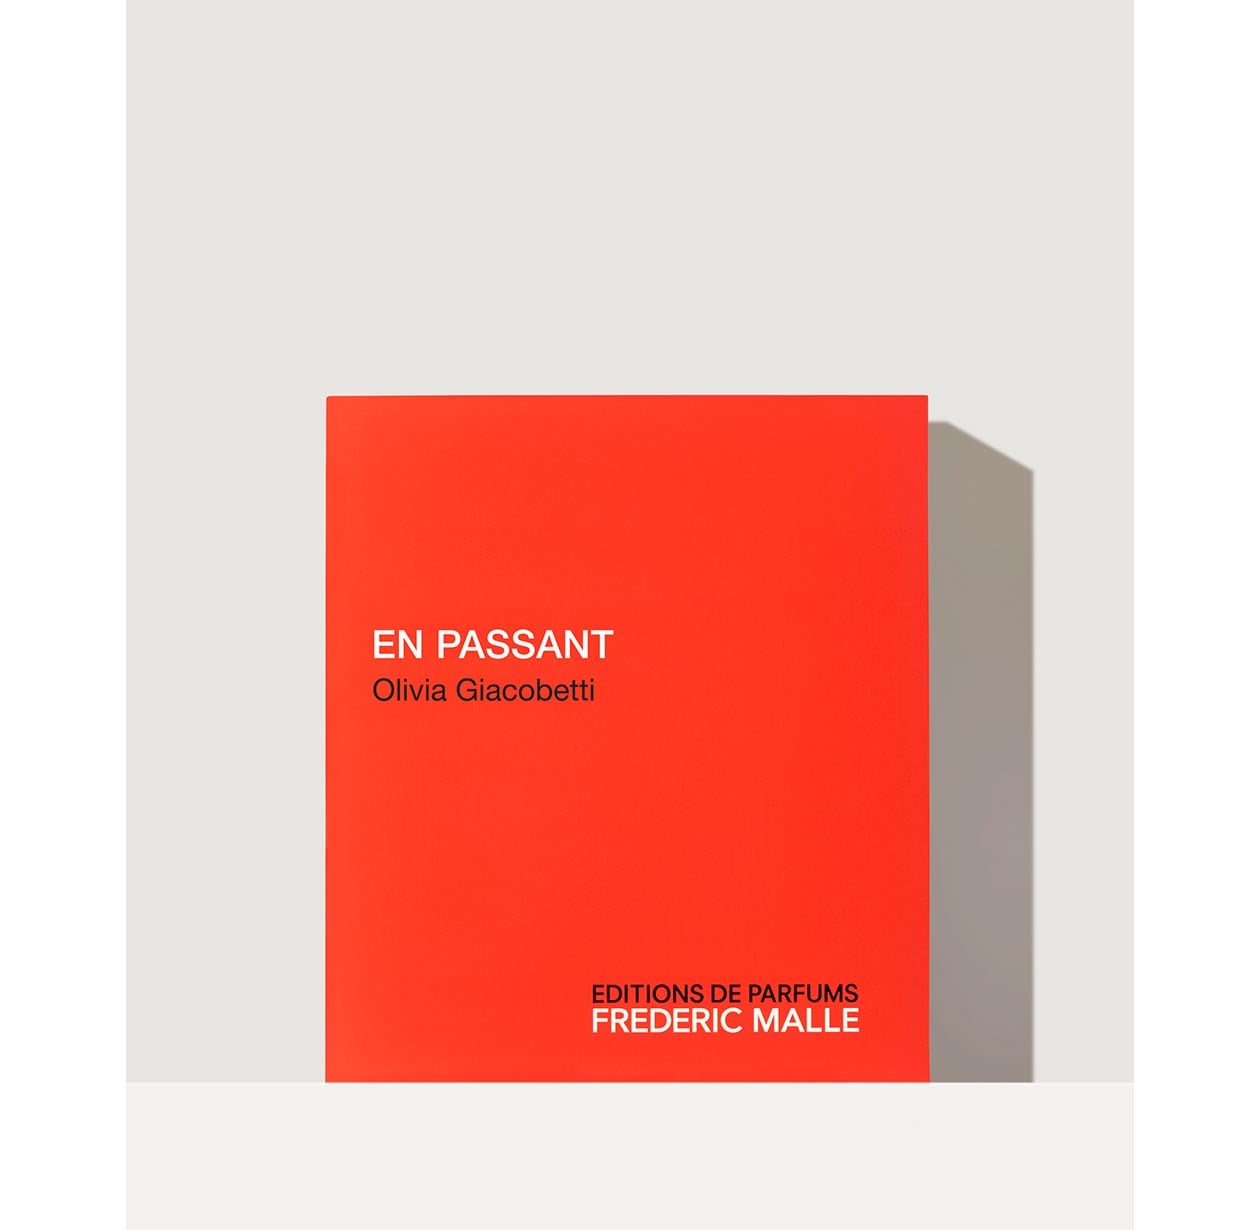 EN PASSANT by Olivia Giacobetti | Frederic Malle